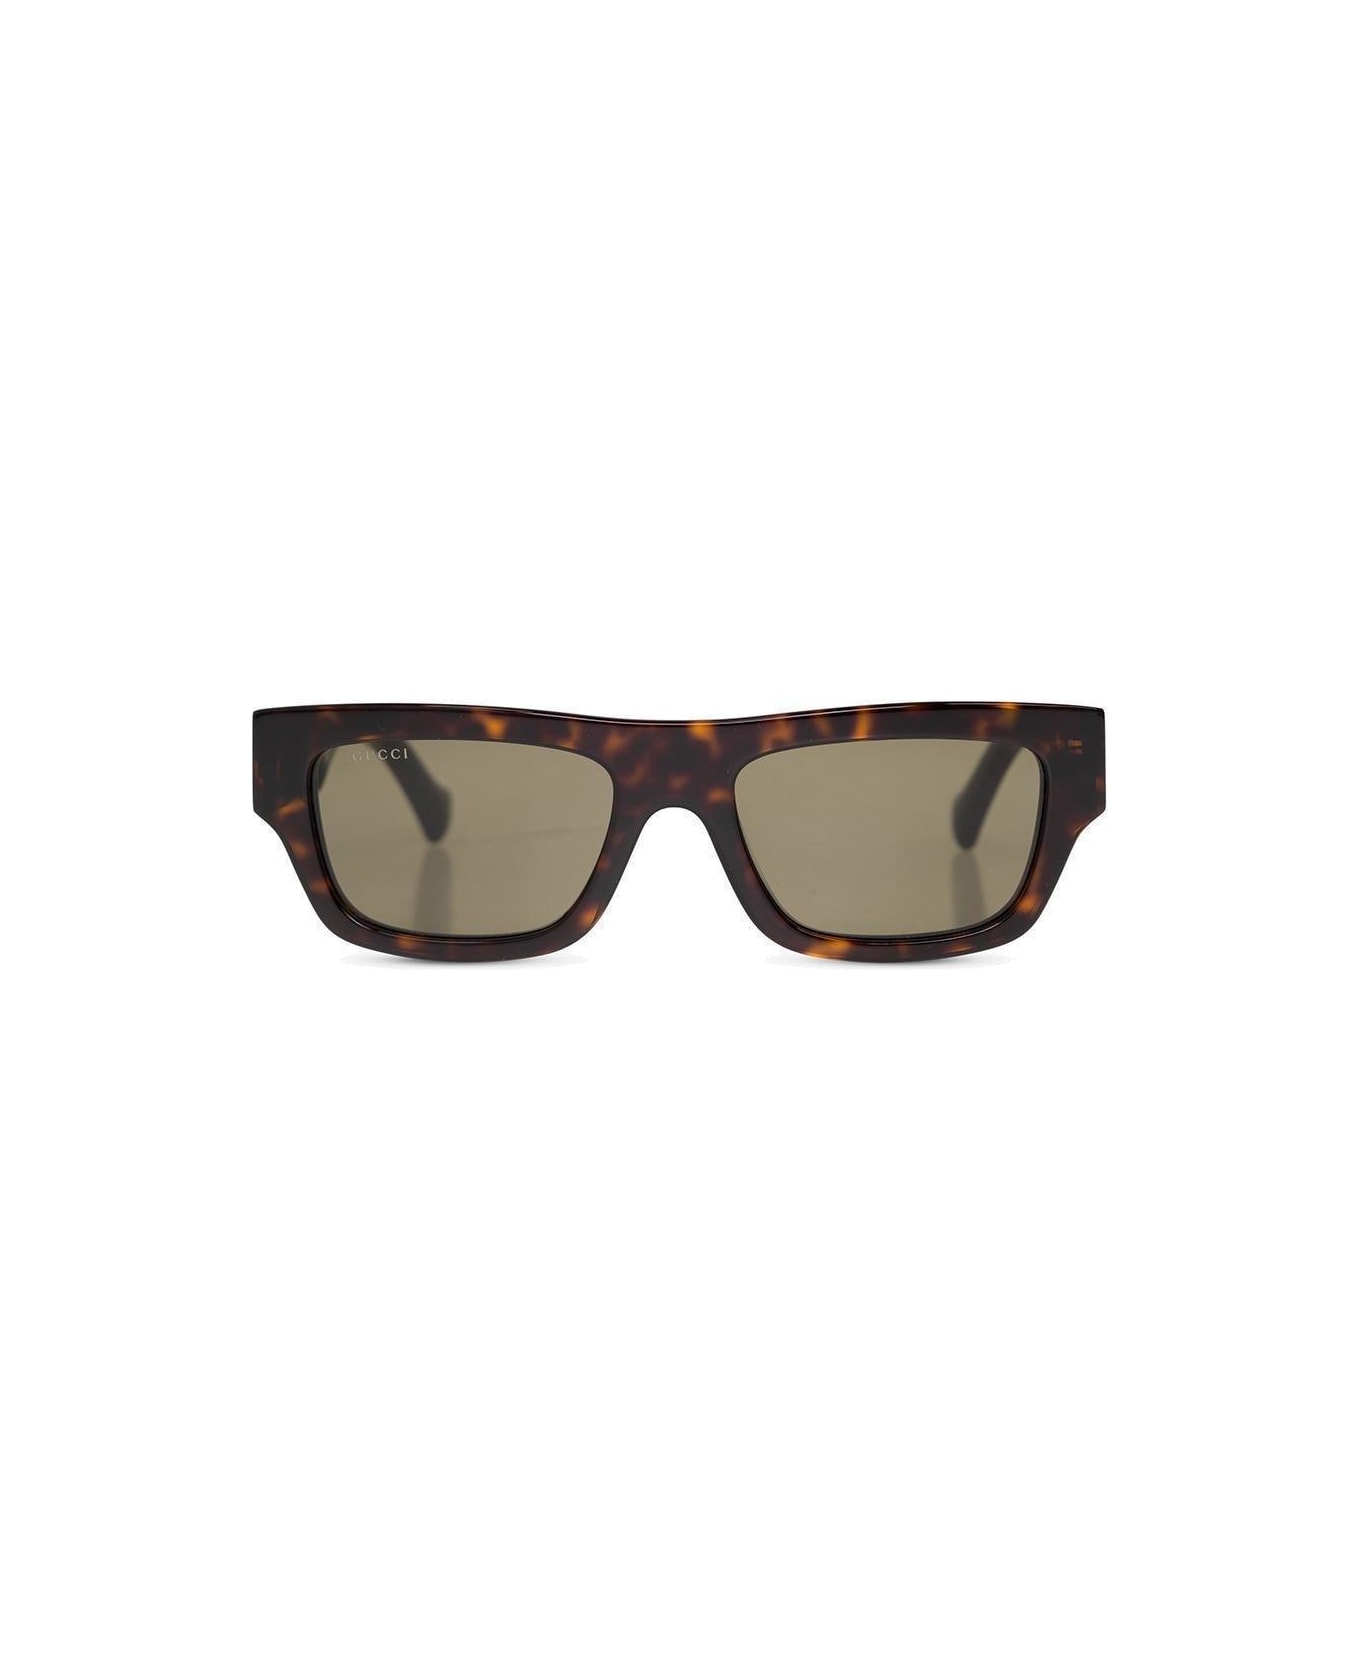 Gucci Eyewear Squared Frame Sunglasses サングラス